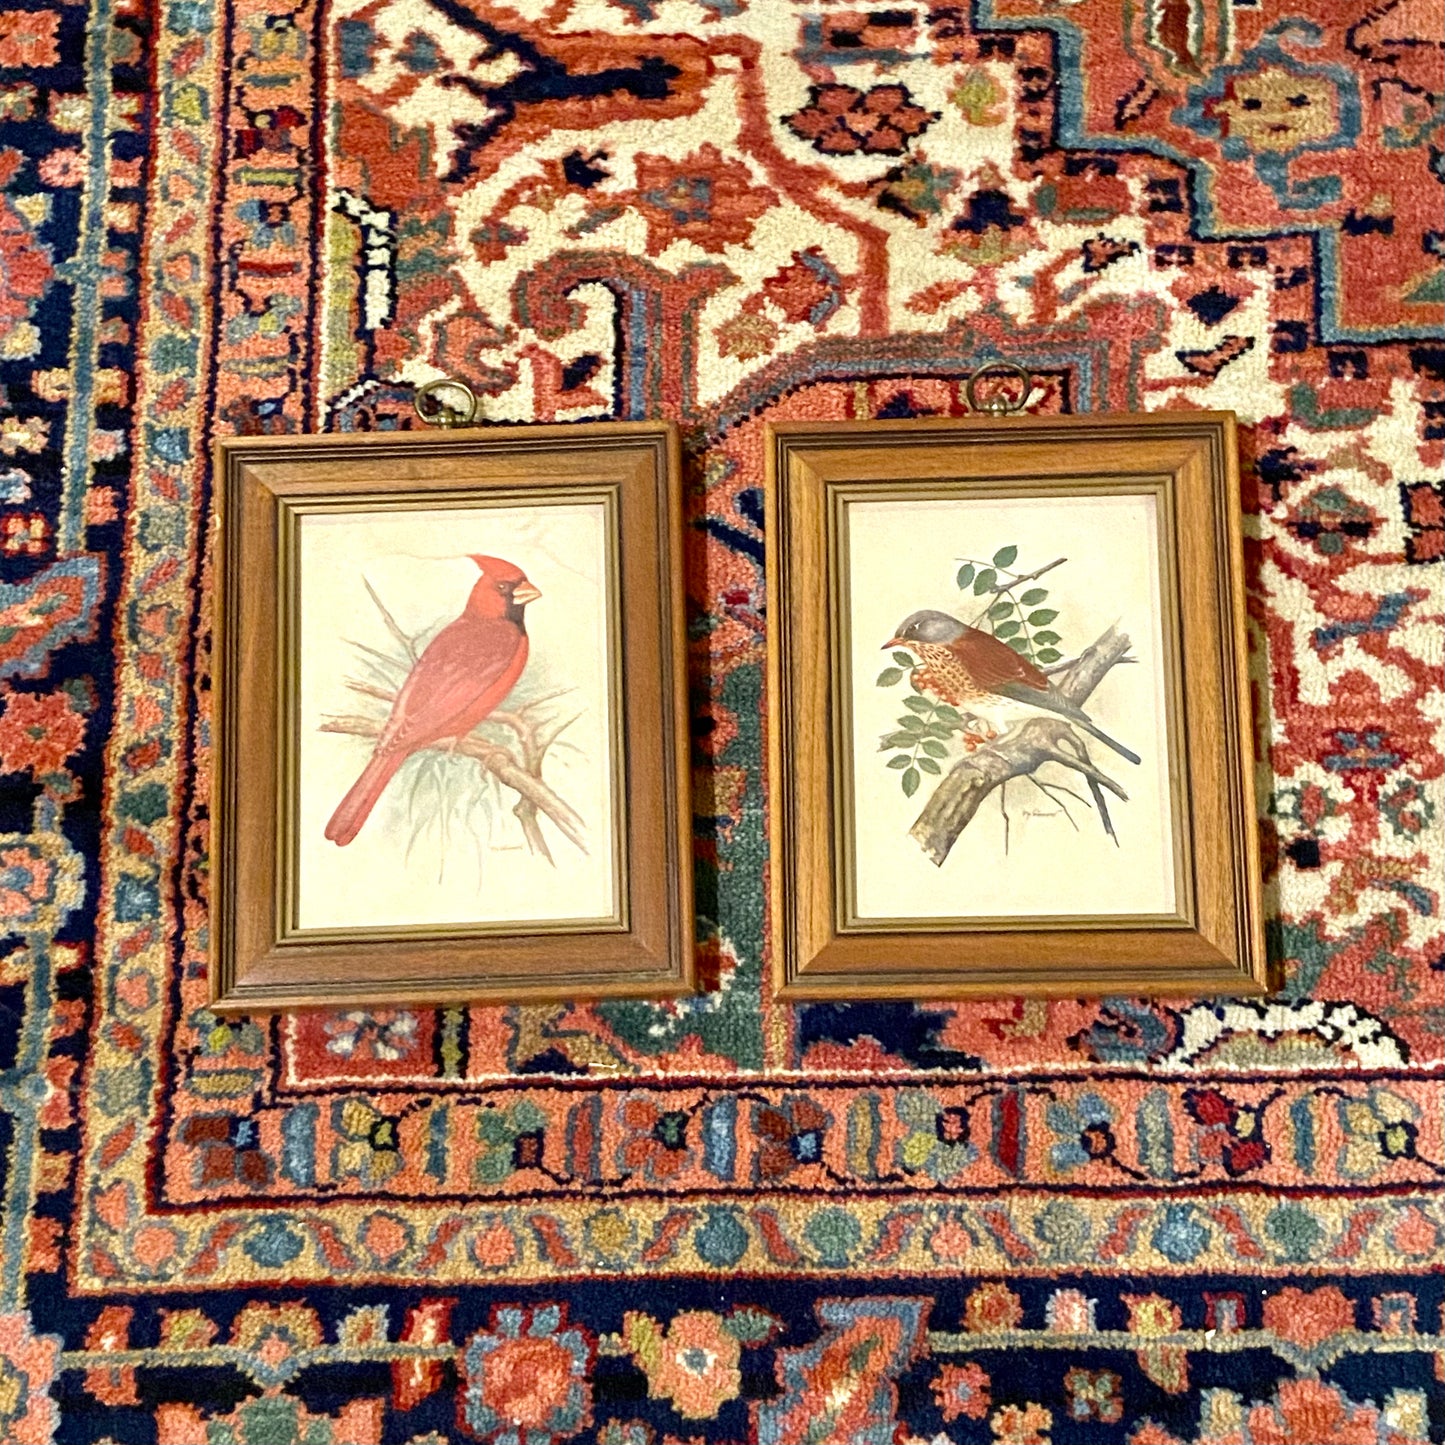 Pair of vintage Audubon bird color lithograph wall art